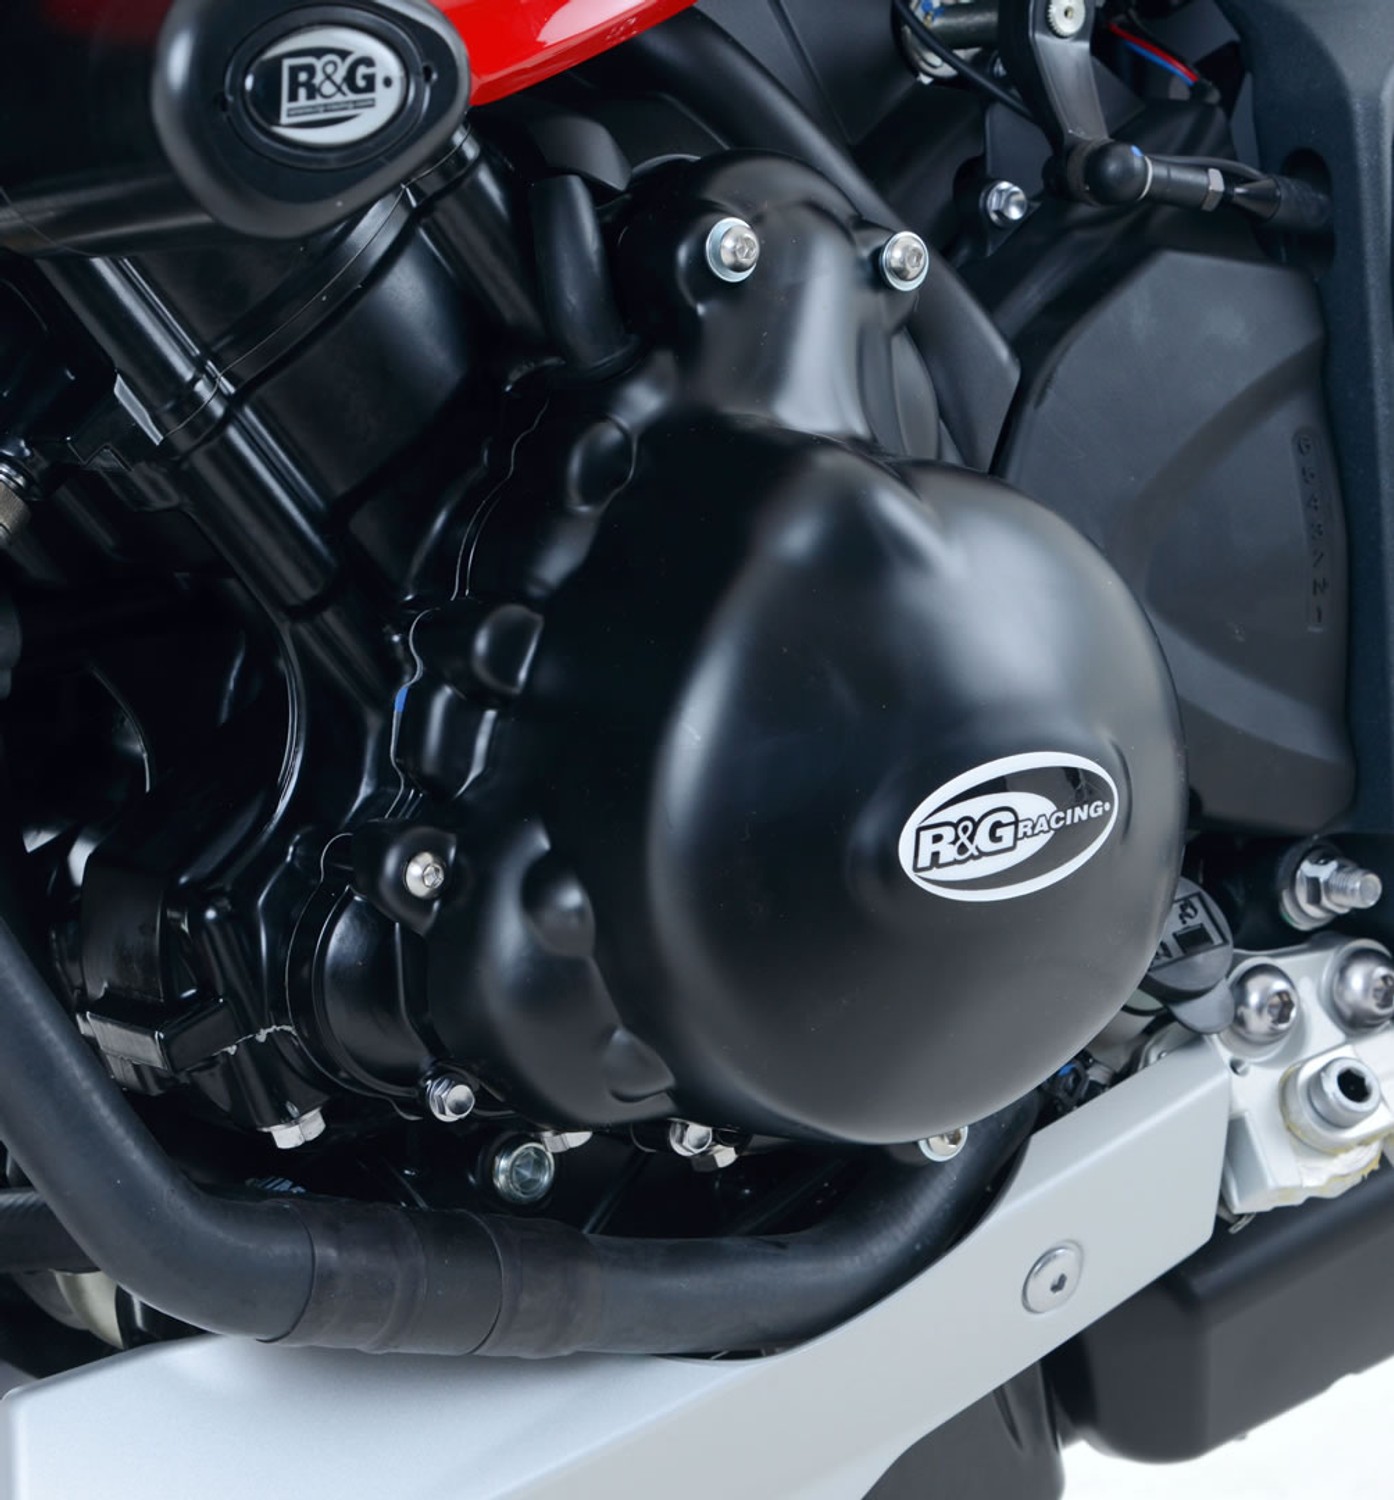 R&G Bike Engine Case Cover For Triumph 2015 Street Triple 675 